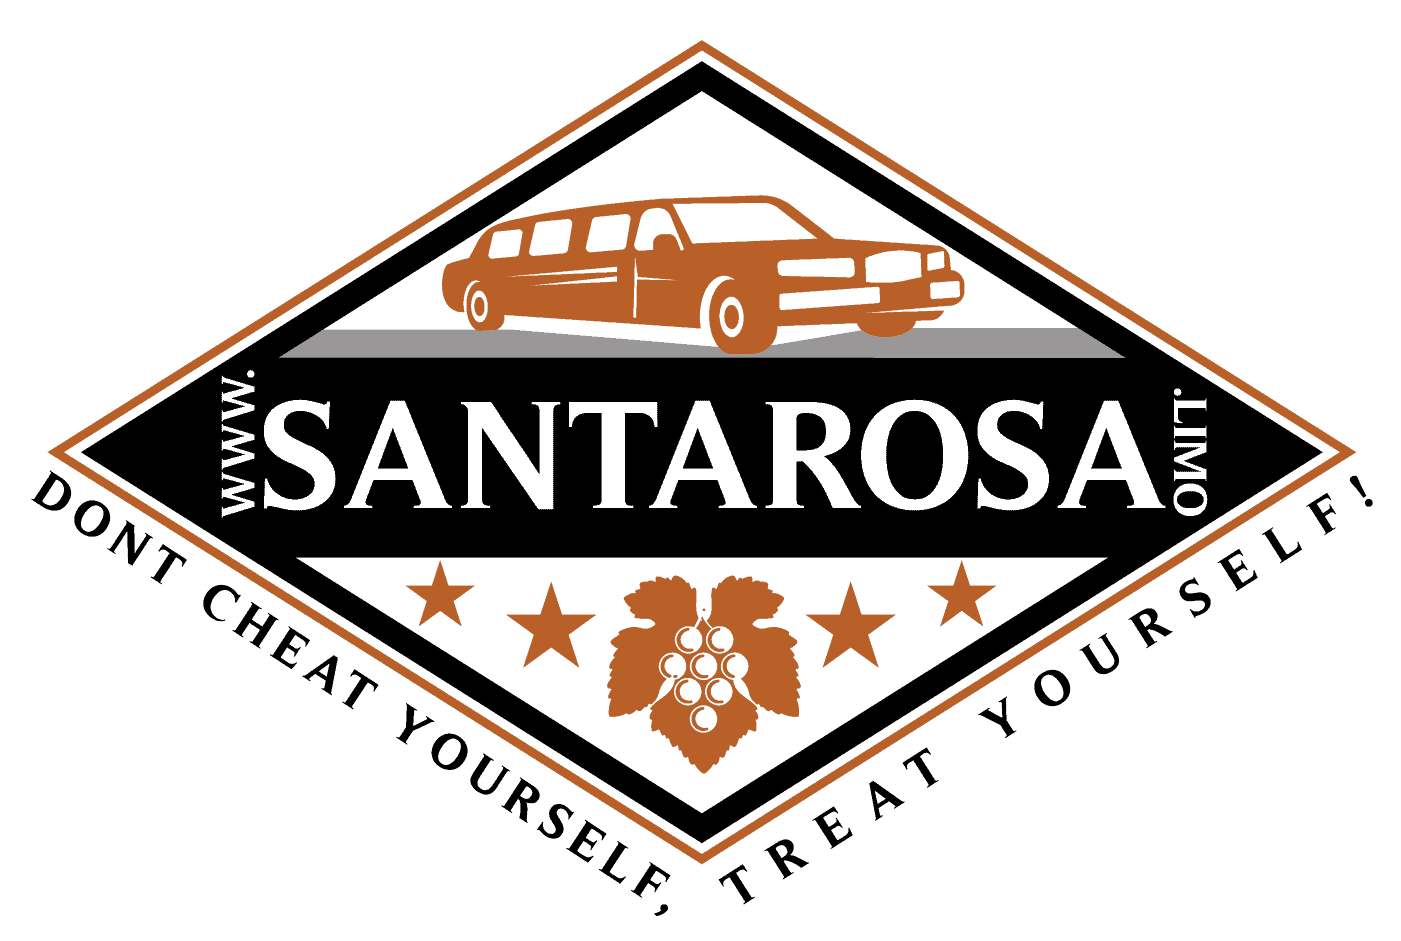 Santa Rosa limo logo image